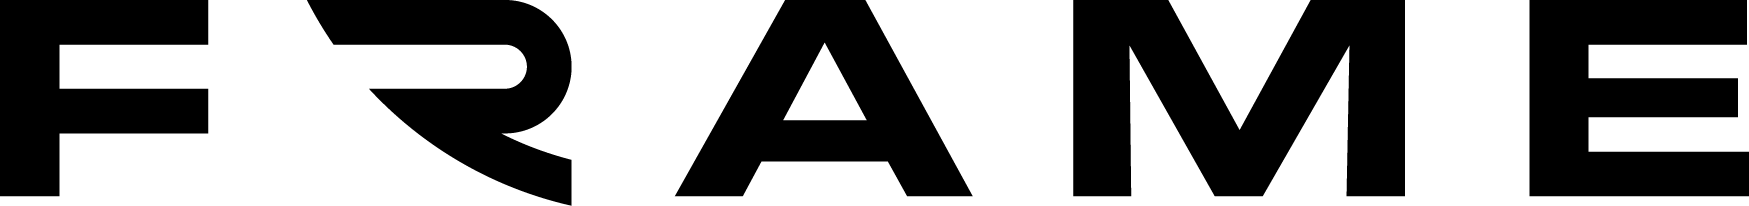 extended frame logo-black.png